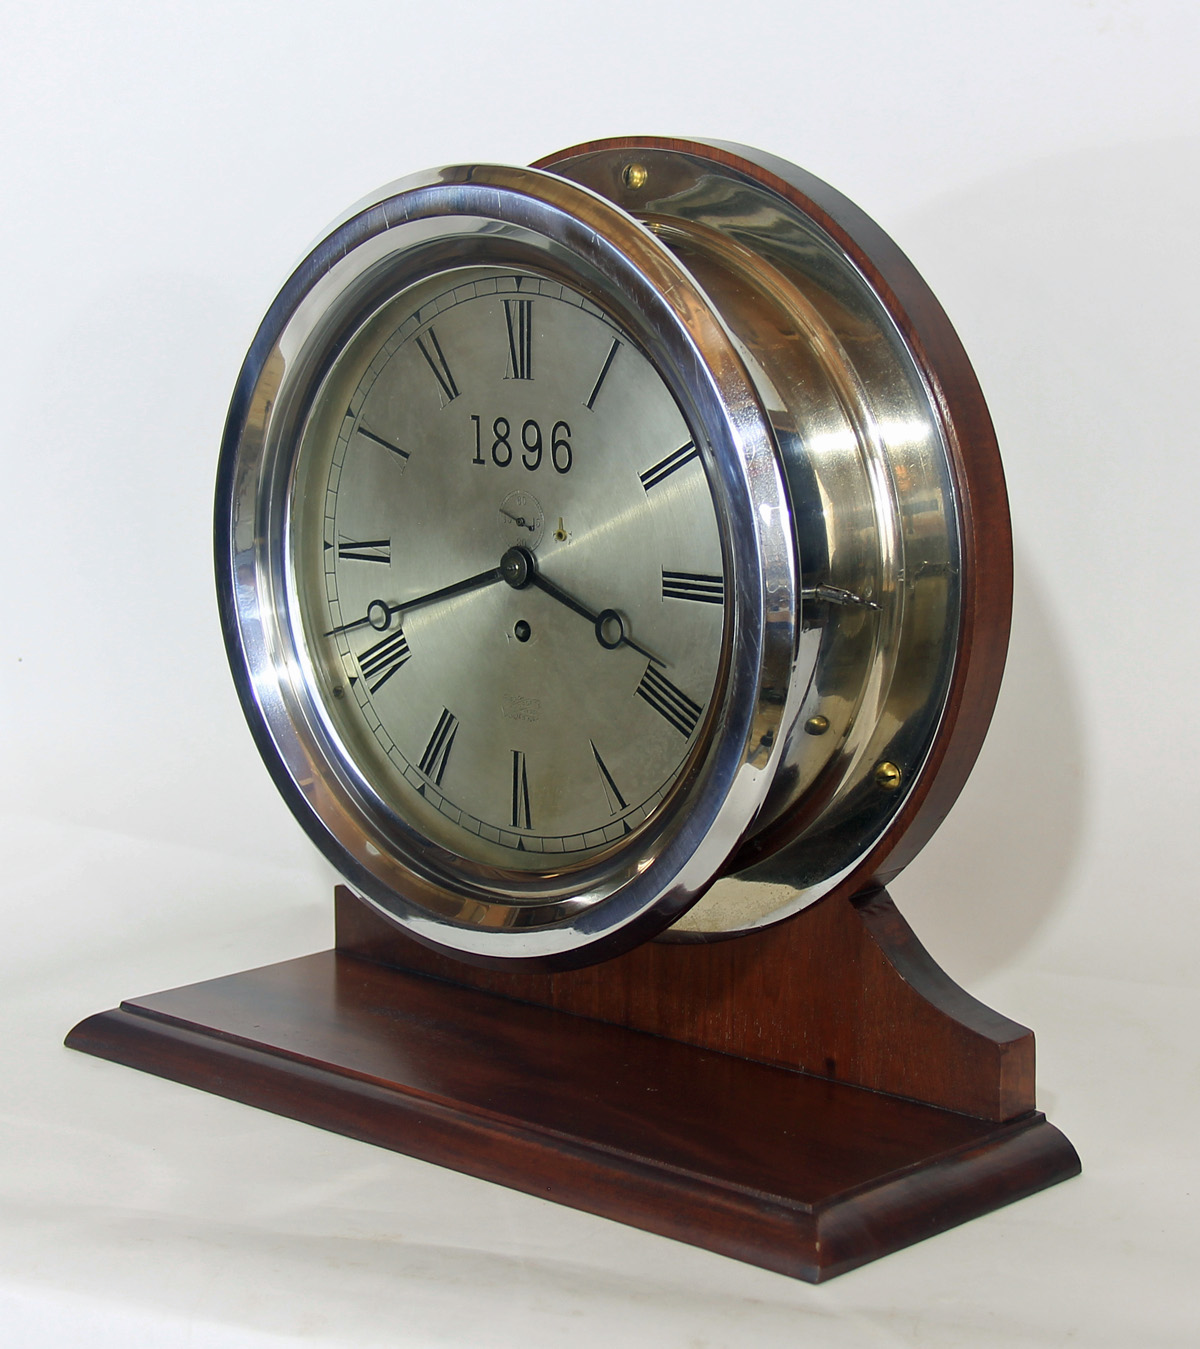 Eastman Clock Company 10 inch Ships Clock - 1896